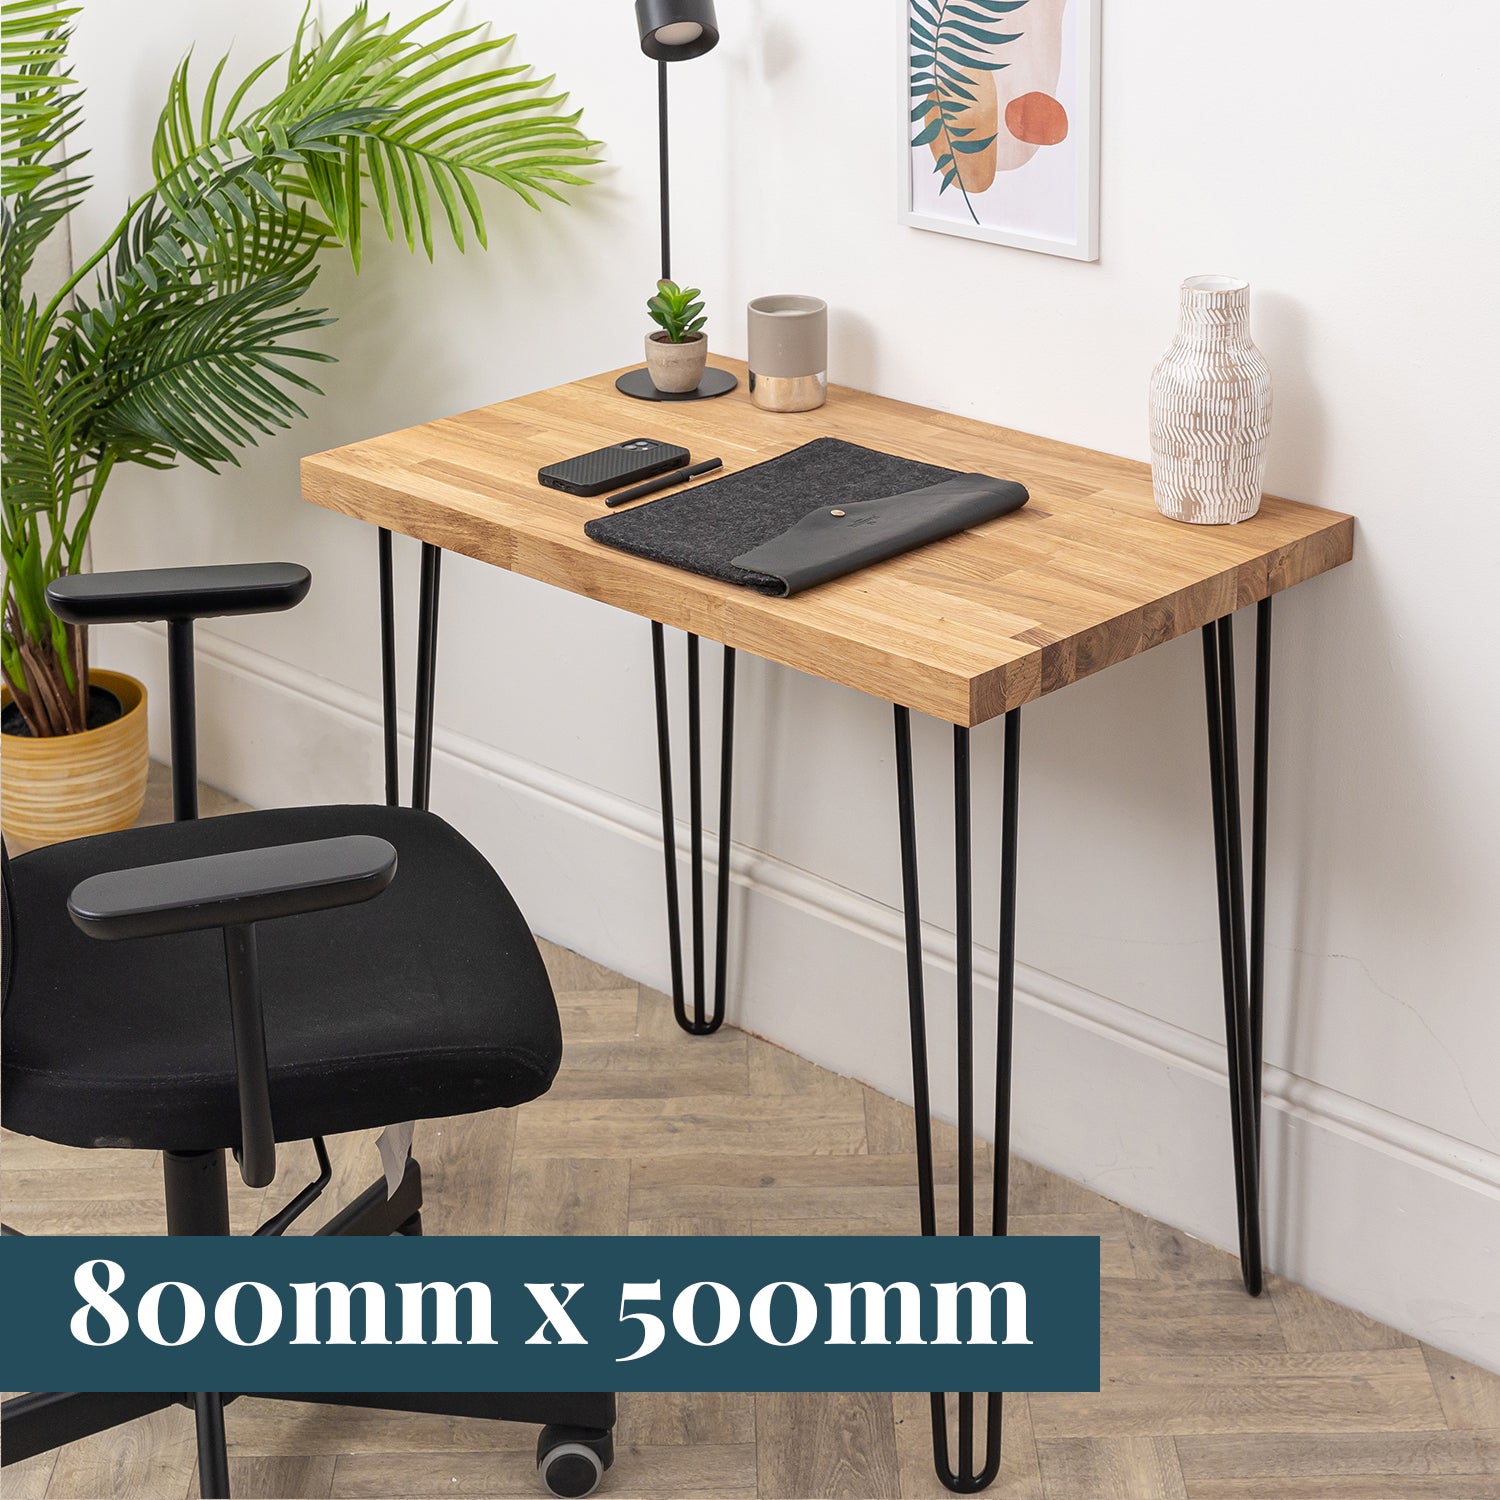 Oak Solid Wood Desk with Black Hairpin Legs - 40mm thick desktop #length_800mm depth_500mm